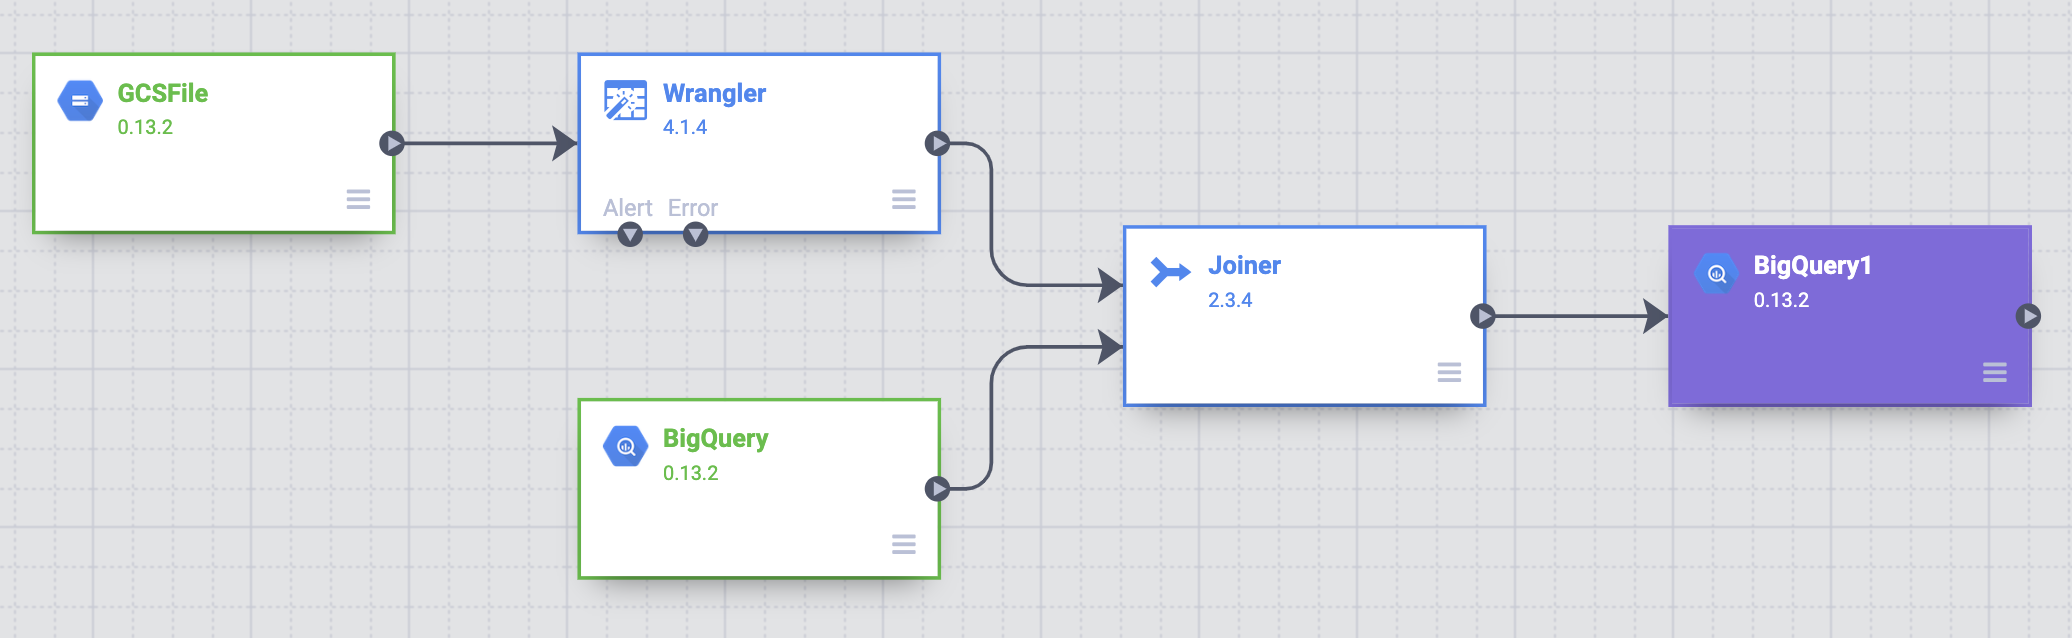 Menghubungkan node Joiner dan node BigQuery